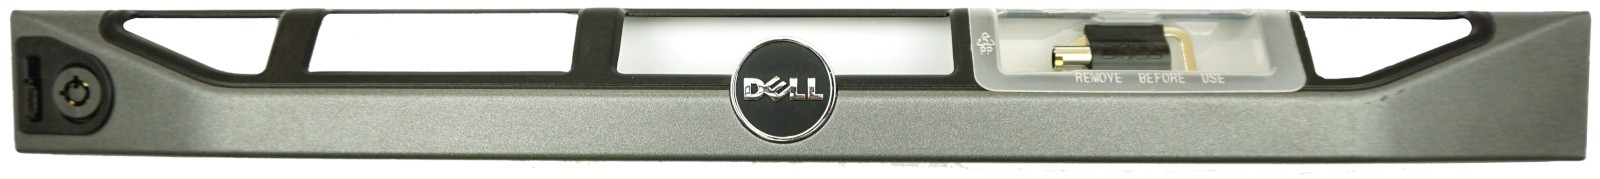 Dell PowerEdge R320, R420, R430, R620, R630 Front Bezel No Key